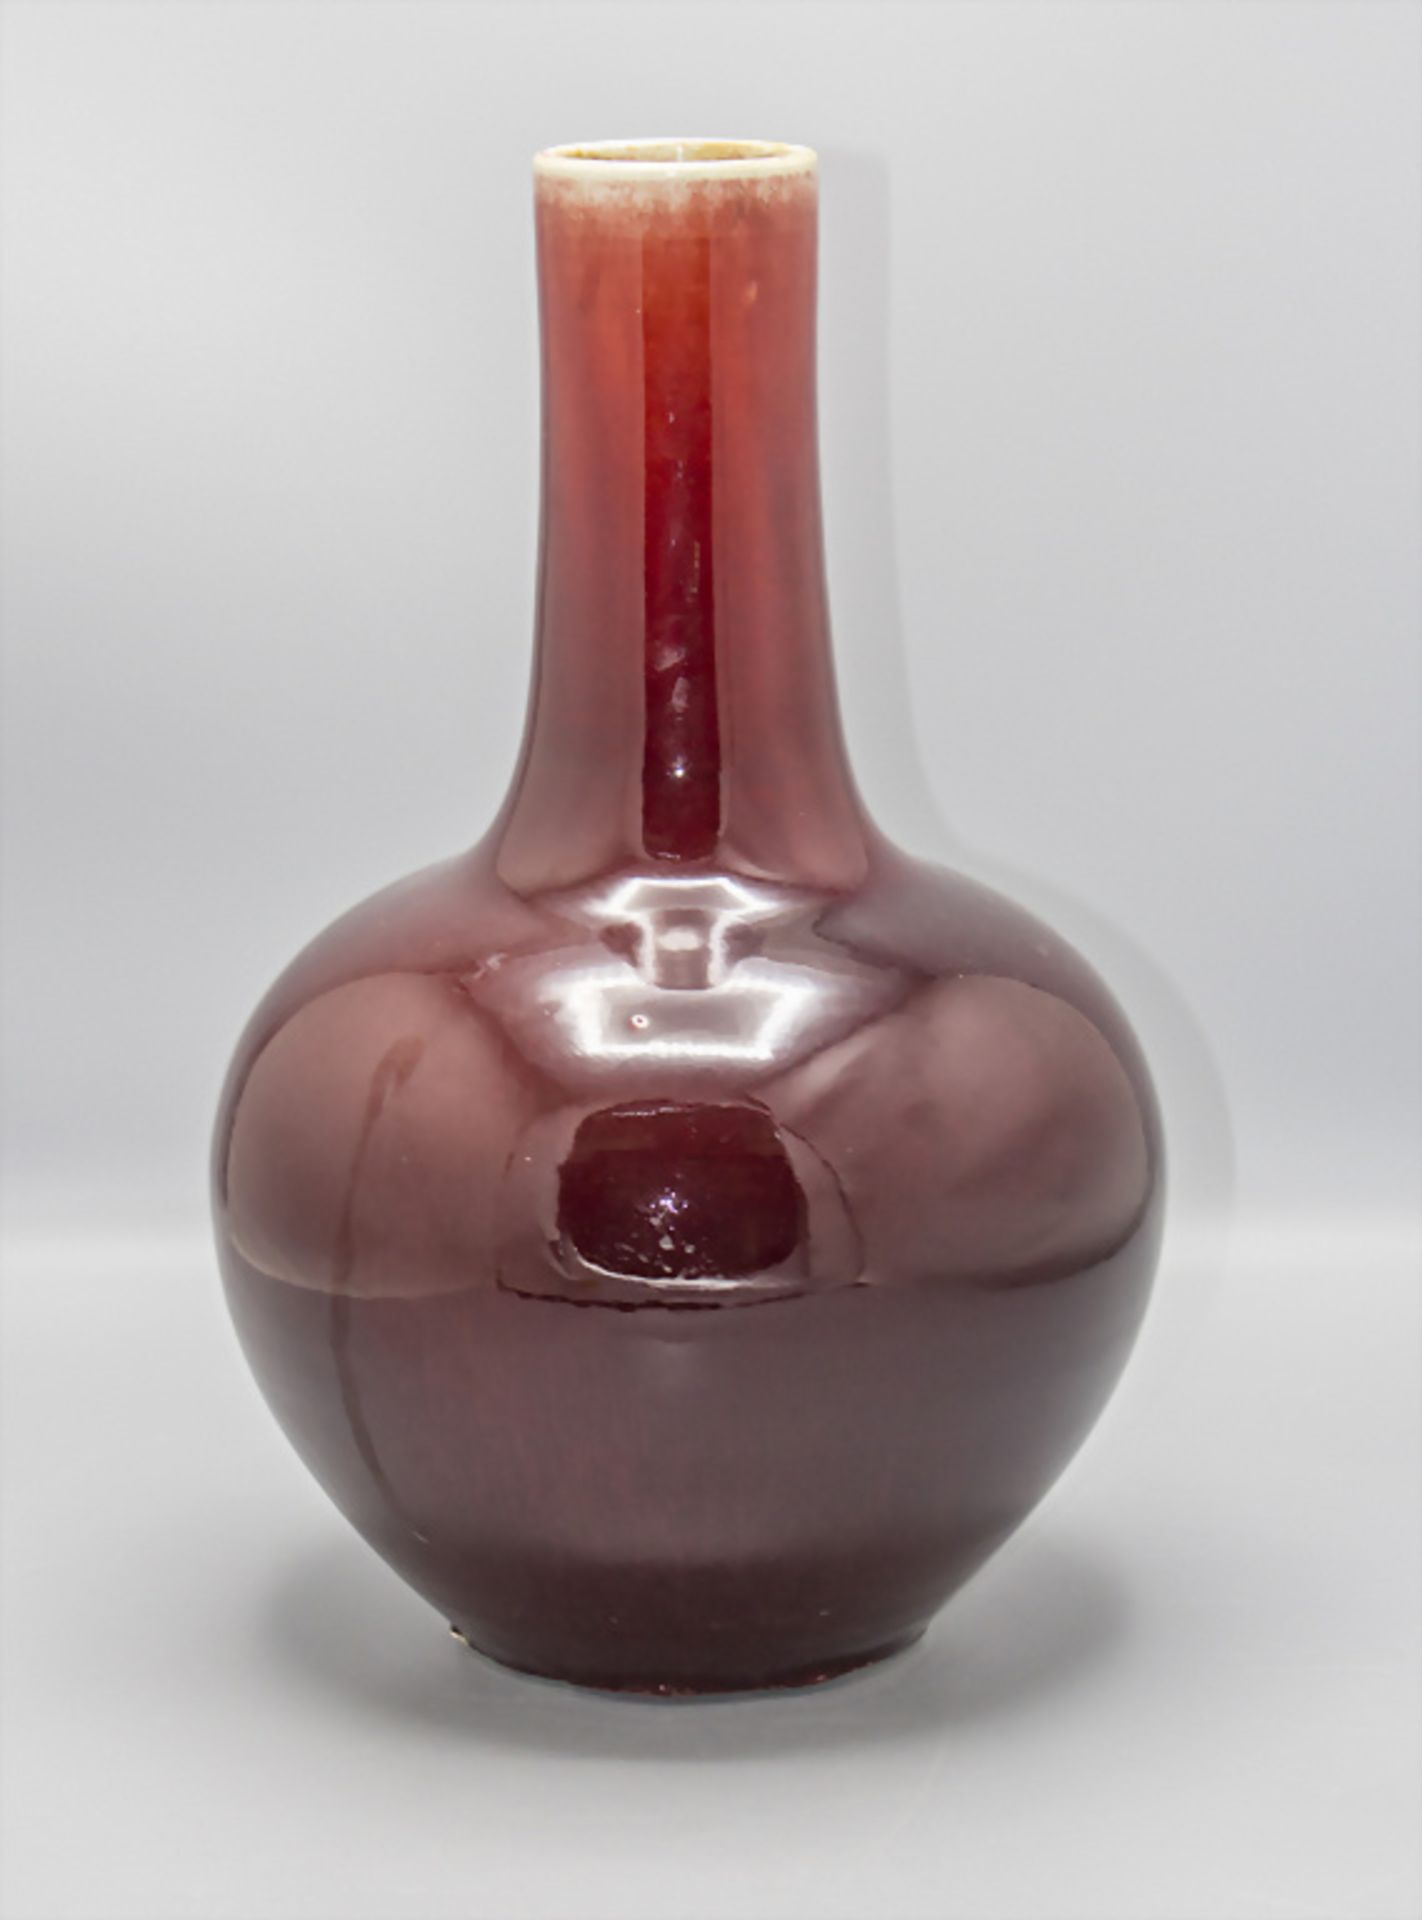 Ochsenblutvase / An ox blood vase / Sang de boeuf vase, China, 18.-19. Jh. - Bild 2 aus 4